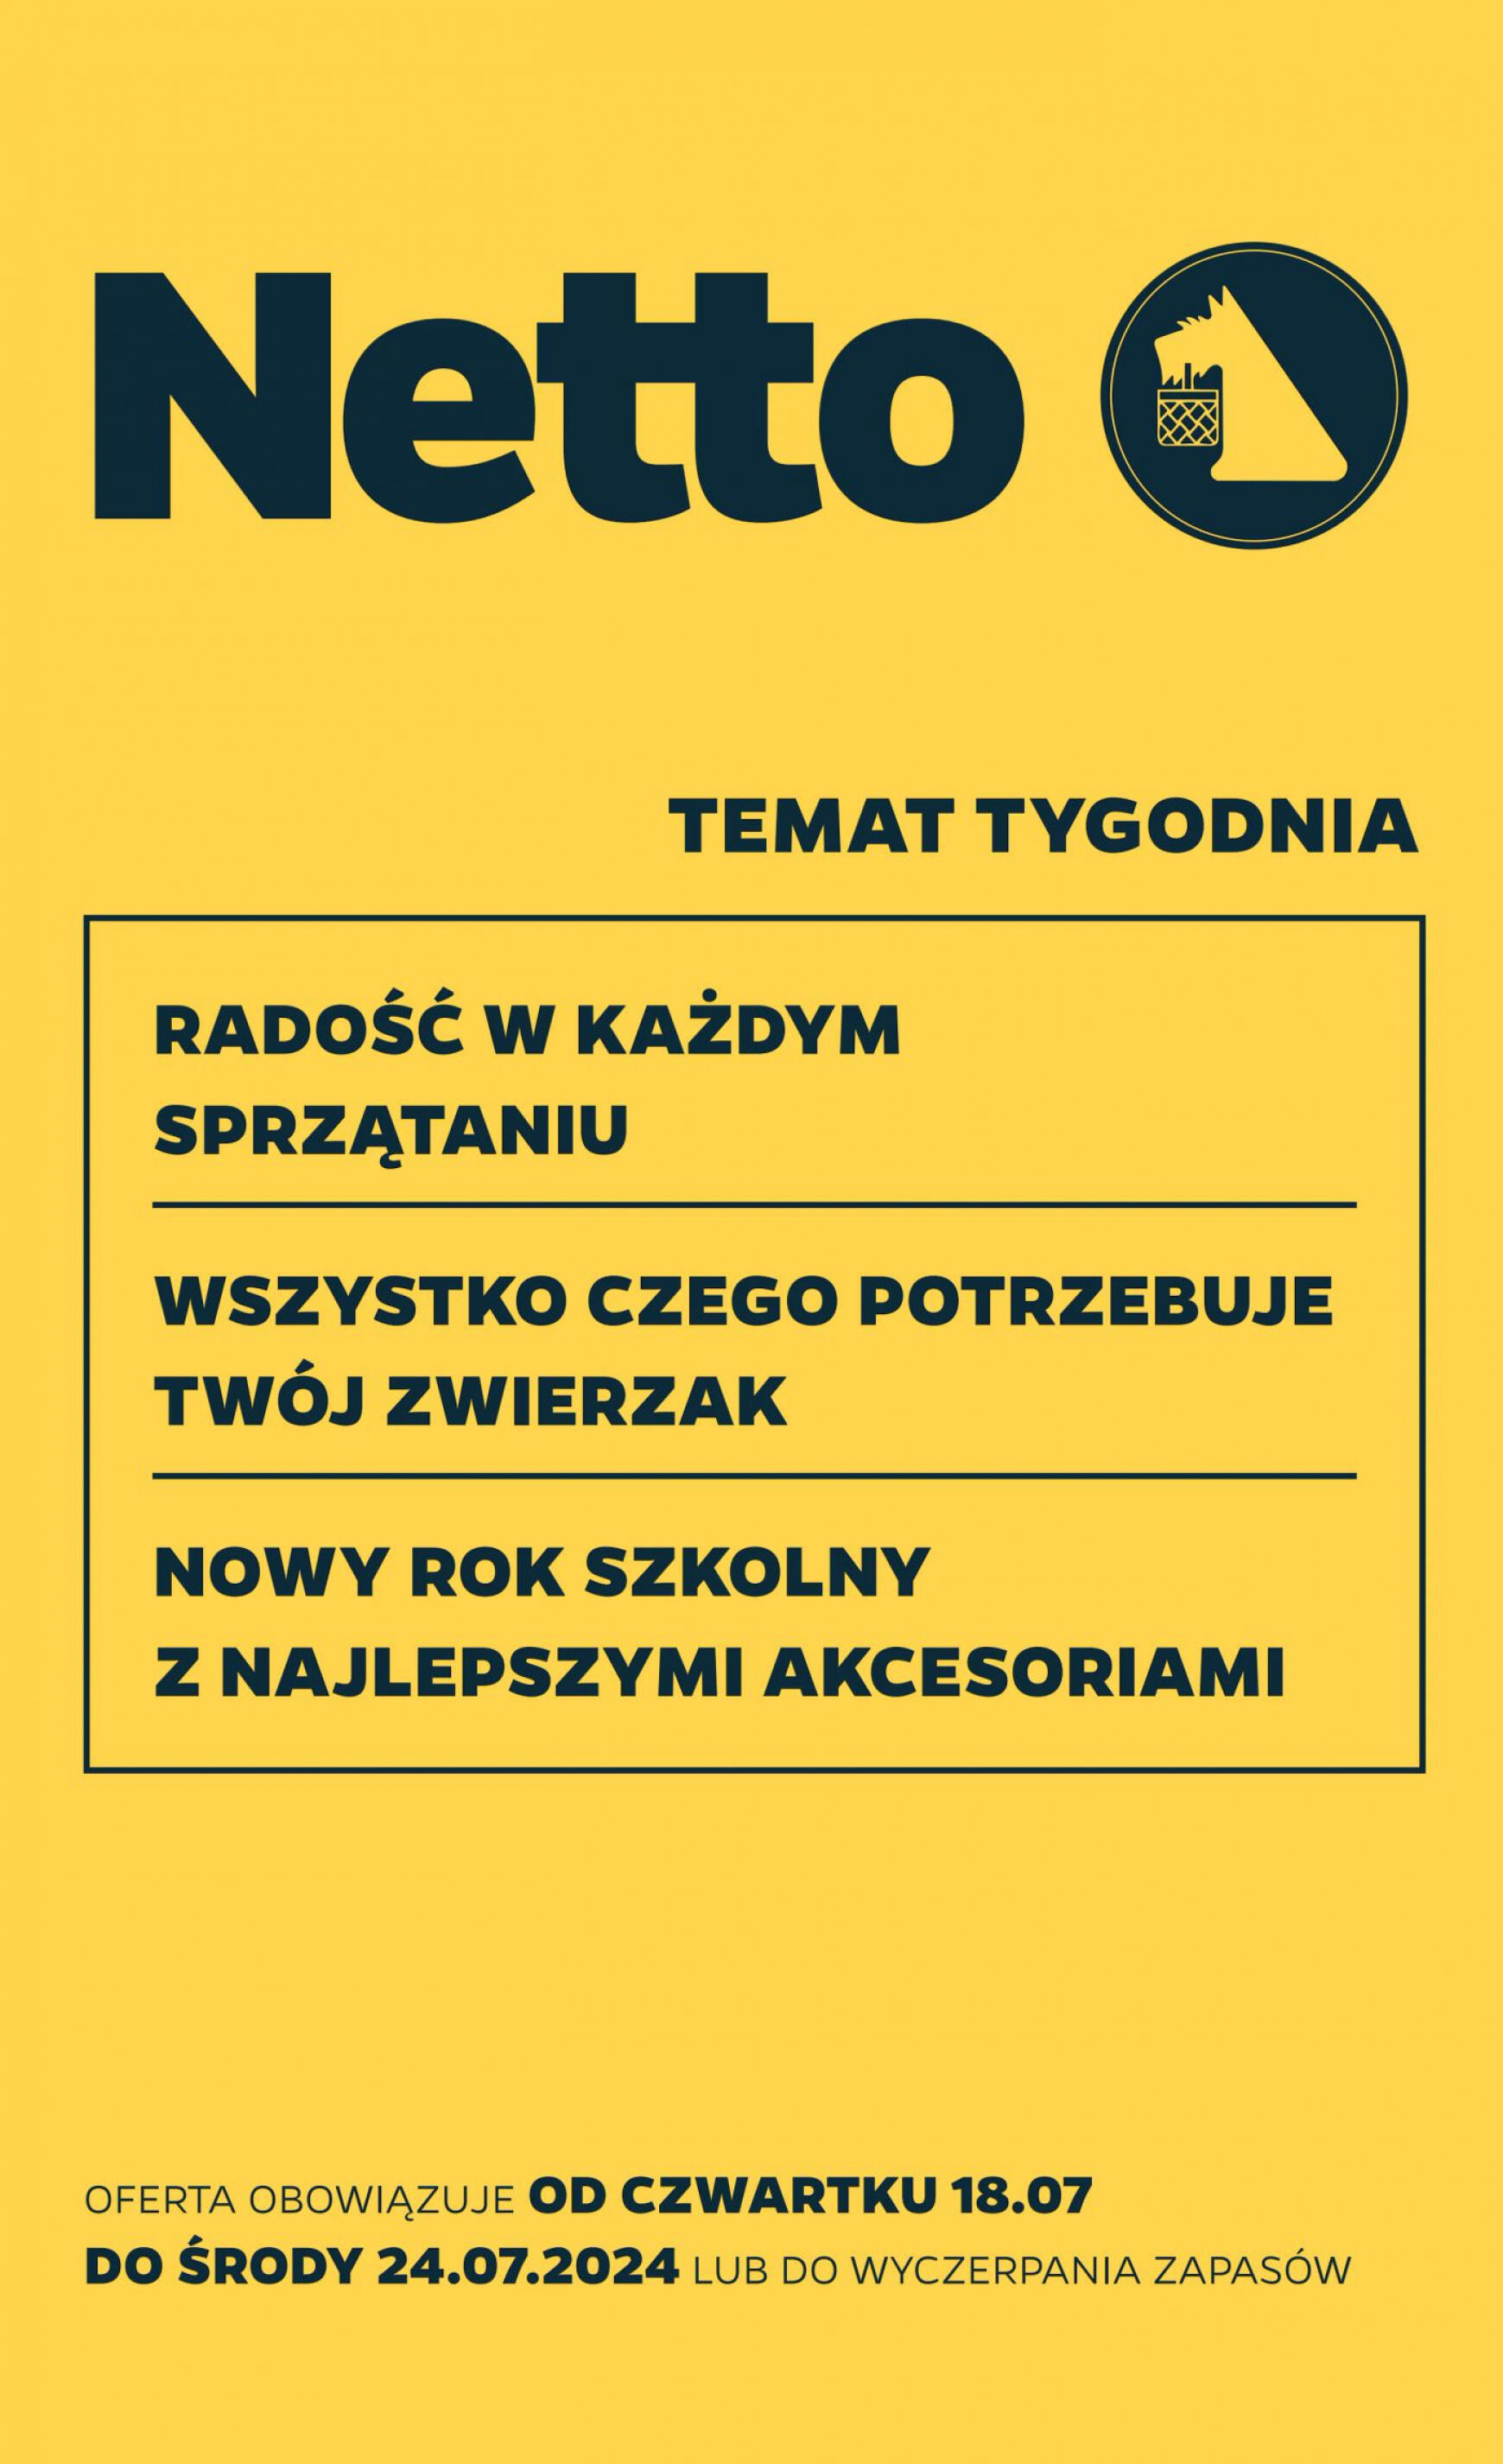 netto - Netto - Non Food gazetka aktualna ważna od 18.07. - 24.07.